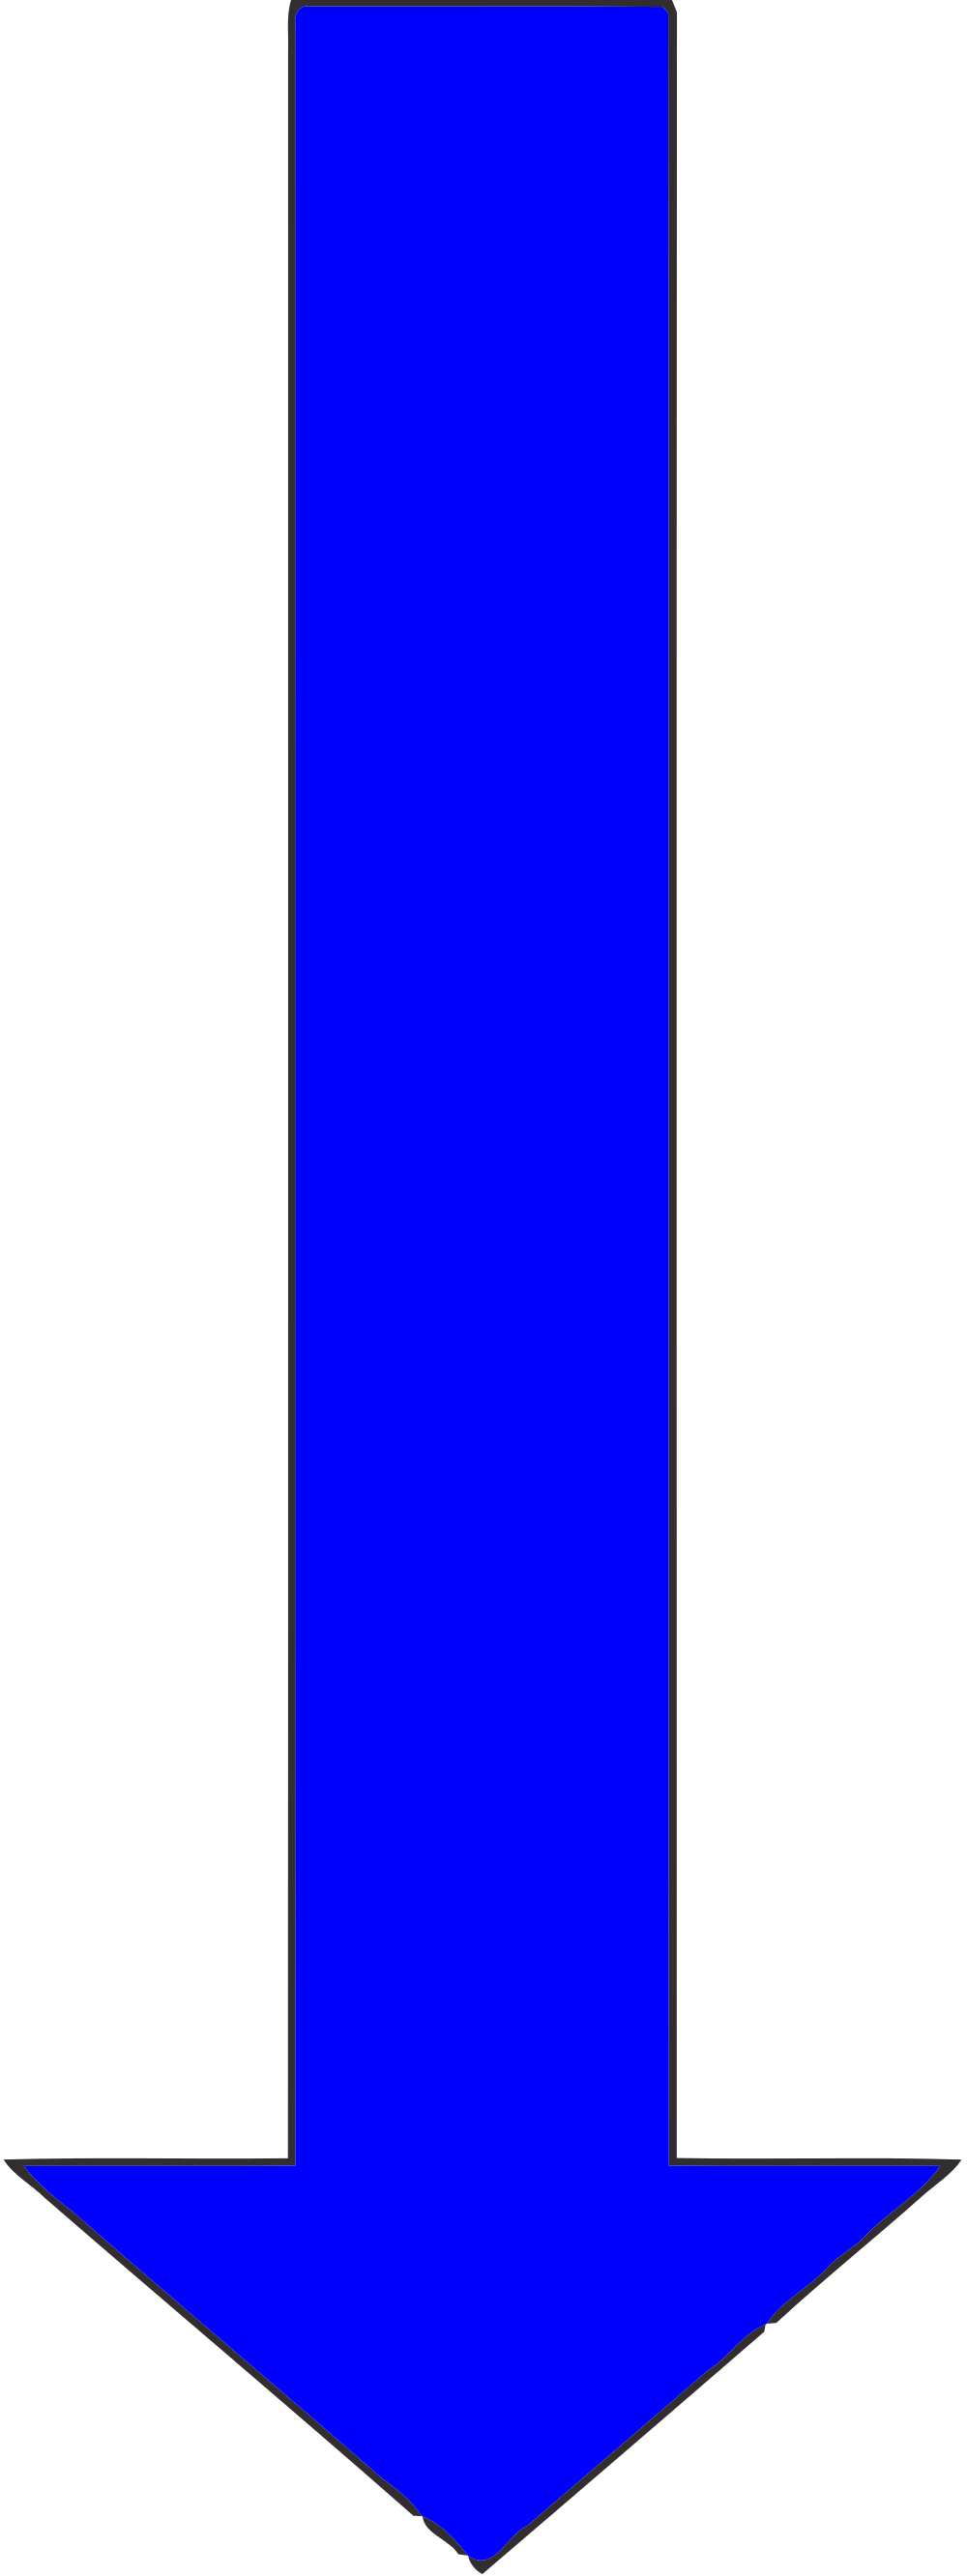 File:Arrow symbol - blue.svg - Wikimedia Commons